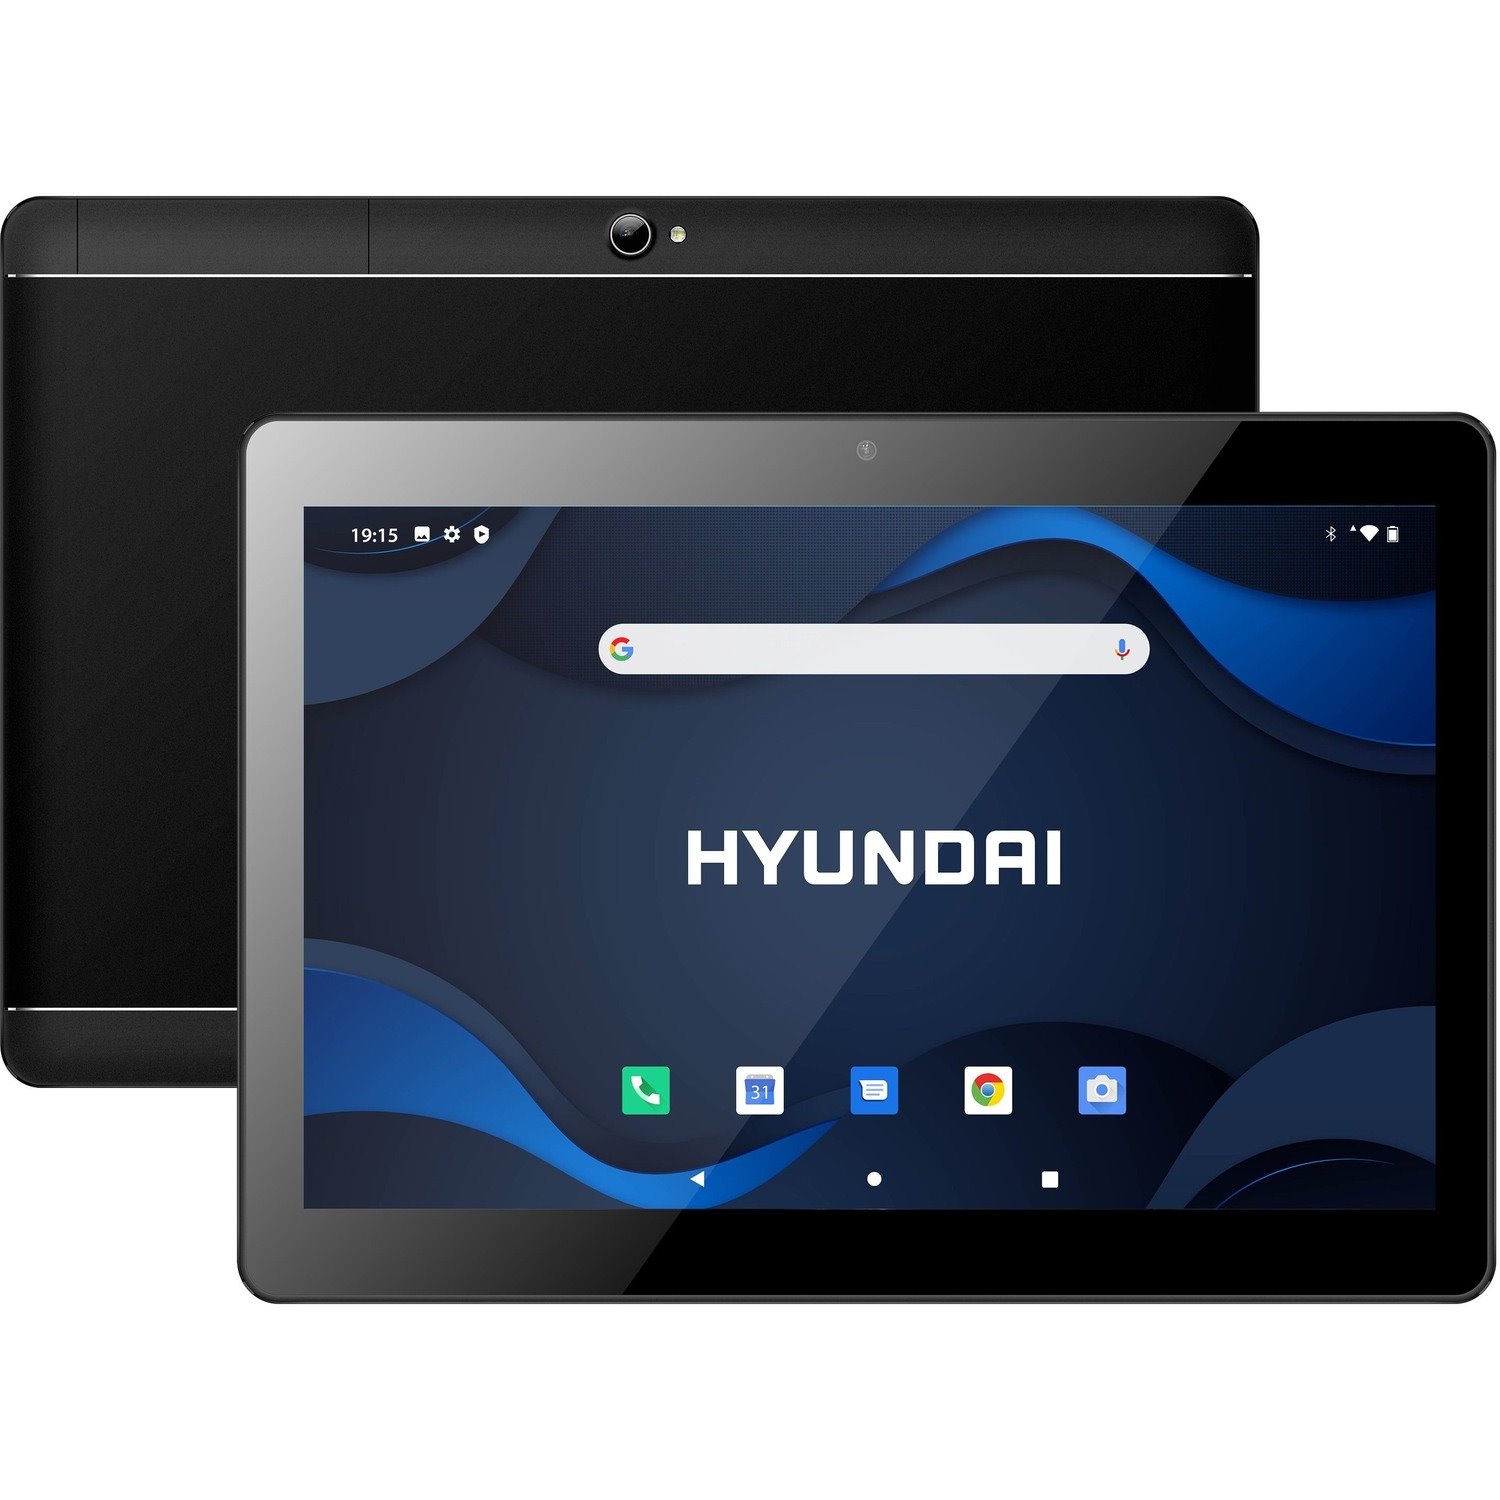 Hyundai HyTab Plus 10LC2, 10.1" Tablet, 800x1280 HD IPS, Android 10 Go edition, Octa-Core Processor, 2GB RAM, 32GB Storage, 2MP/5MP, LTE, Black